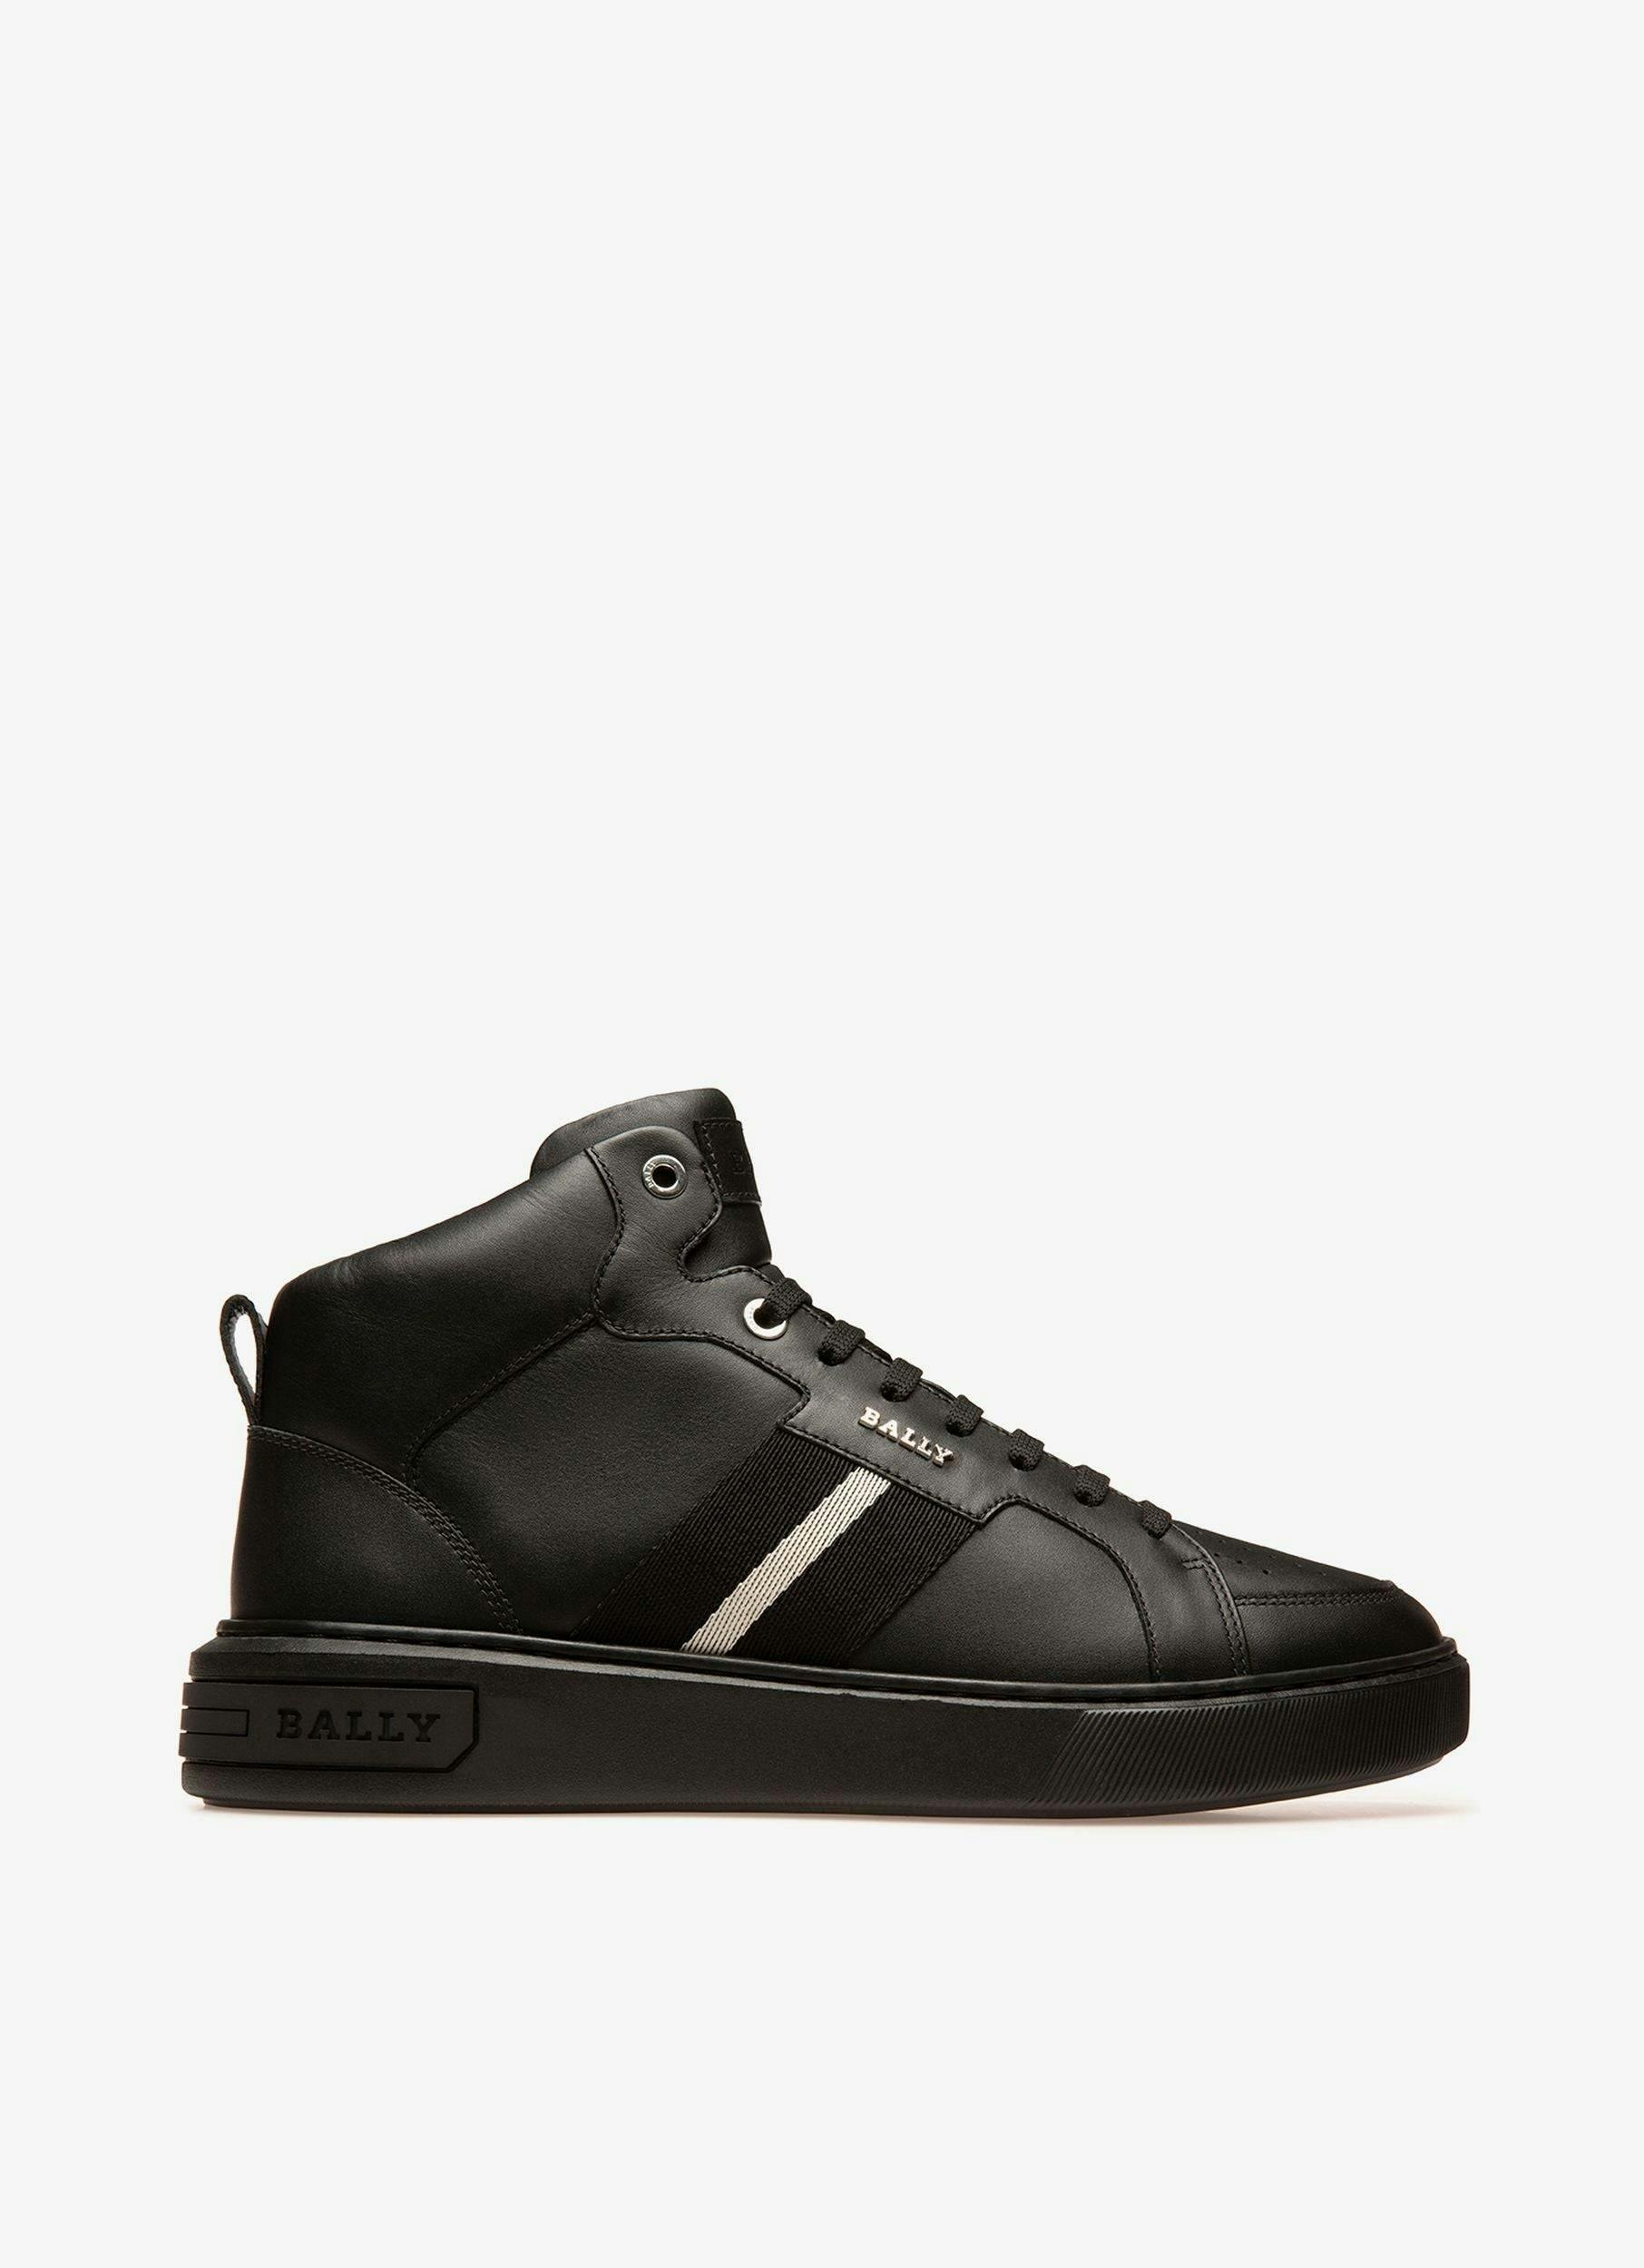 Myles Leather Sneakers In Black - Men's - Bally - 01